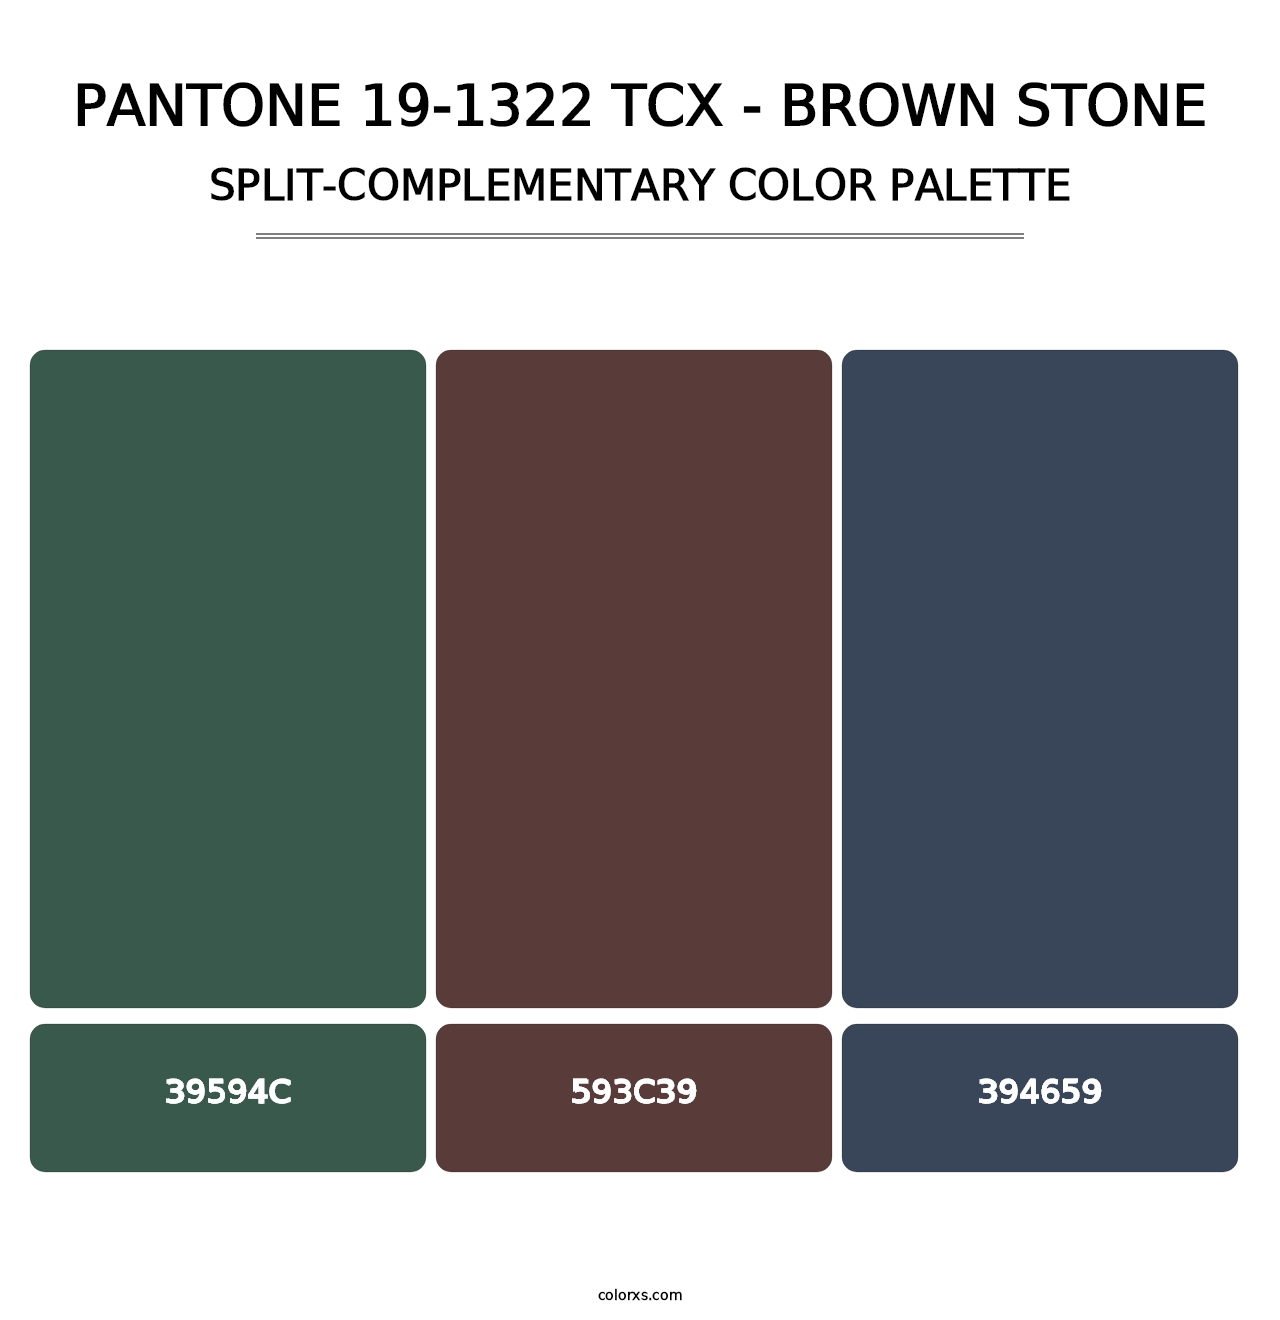 PANTONE 19-1322 TCX - Brown Stone - Split-Complementary Color Palette